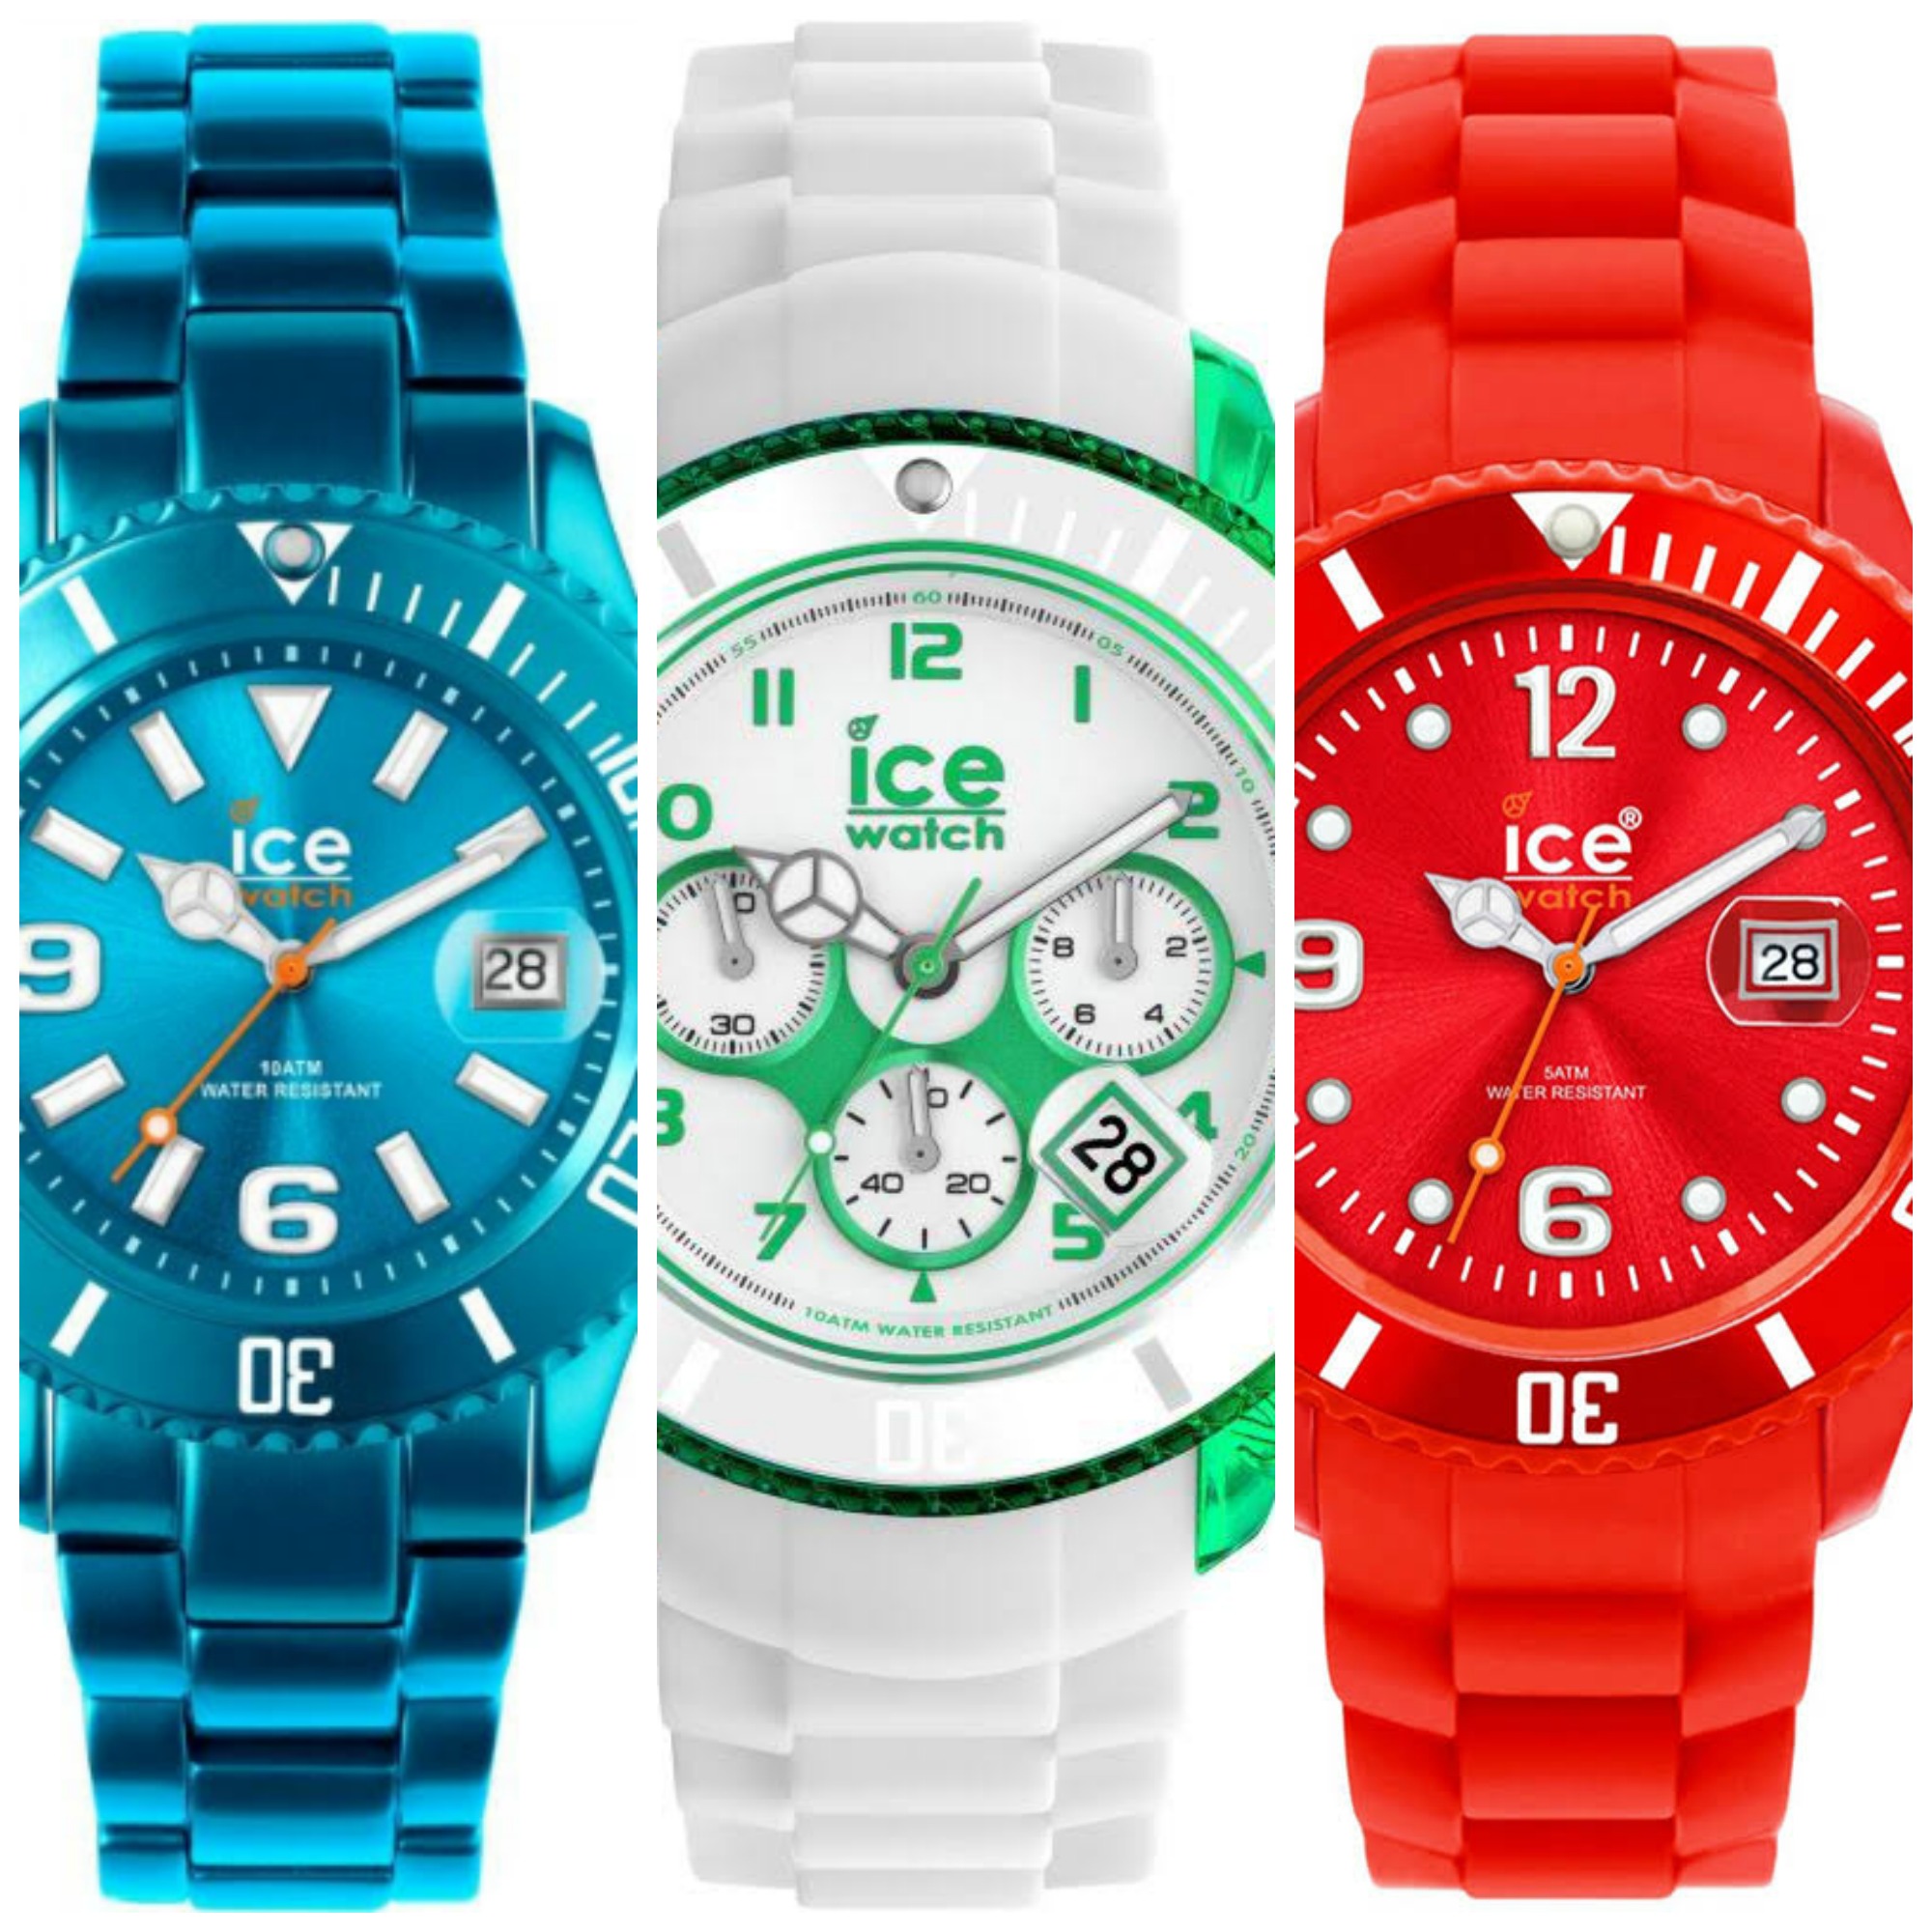 Часы айс. Айс вотч. Зеленые часы Ice. Часы Ice watch. Ice watch брелок.